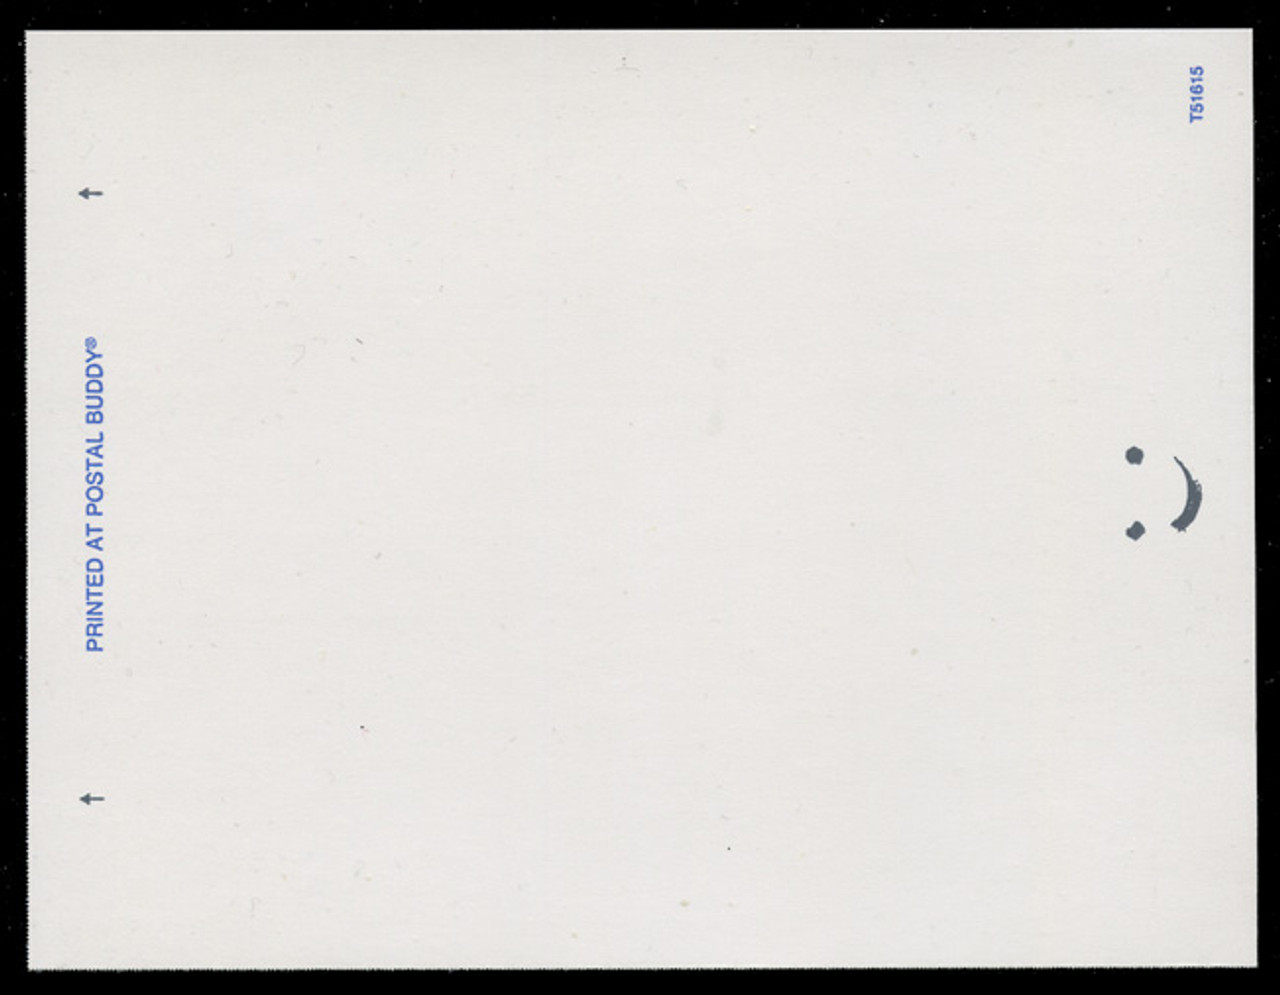 U.S. Scott # CVUX4, UPSS # PB3a2, 1993 19c Star & Flag, black on white, backside C - Mint Postal Buddy Card (See Warranty)